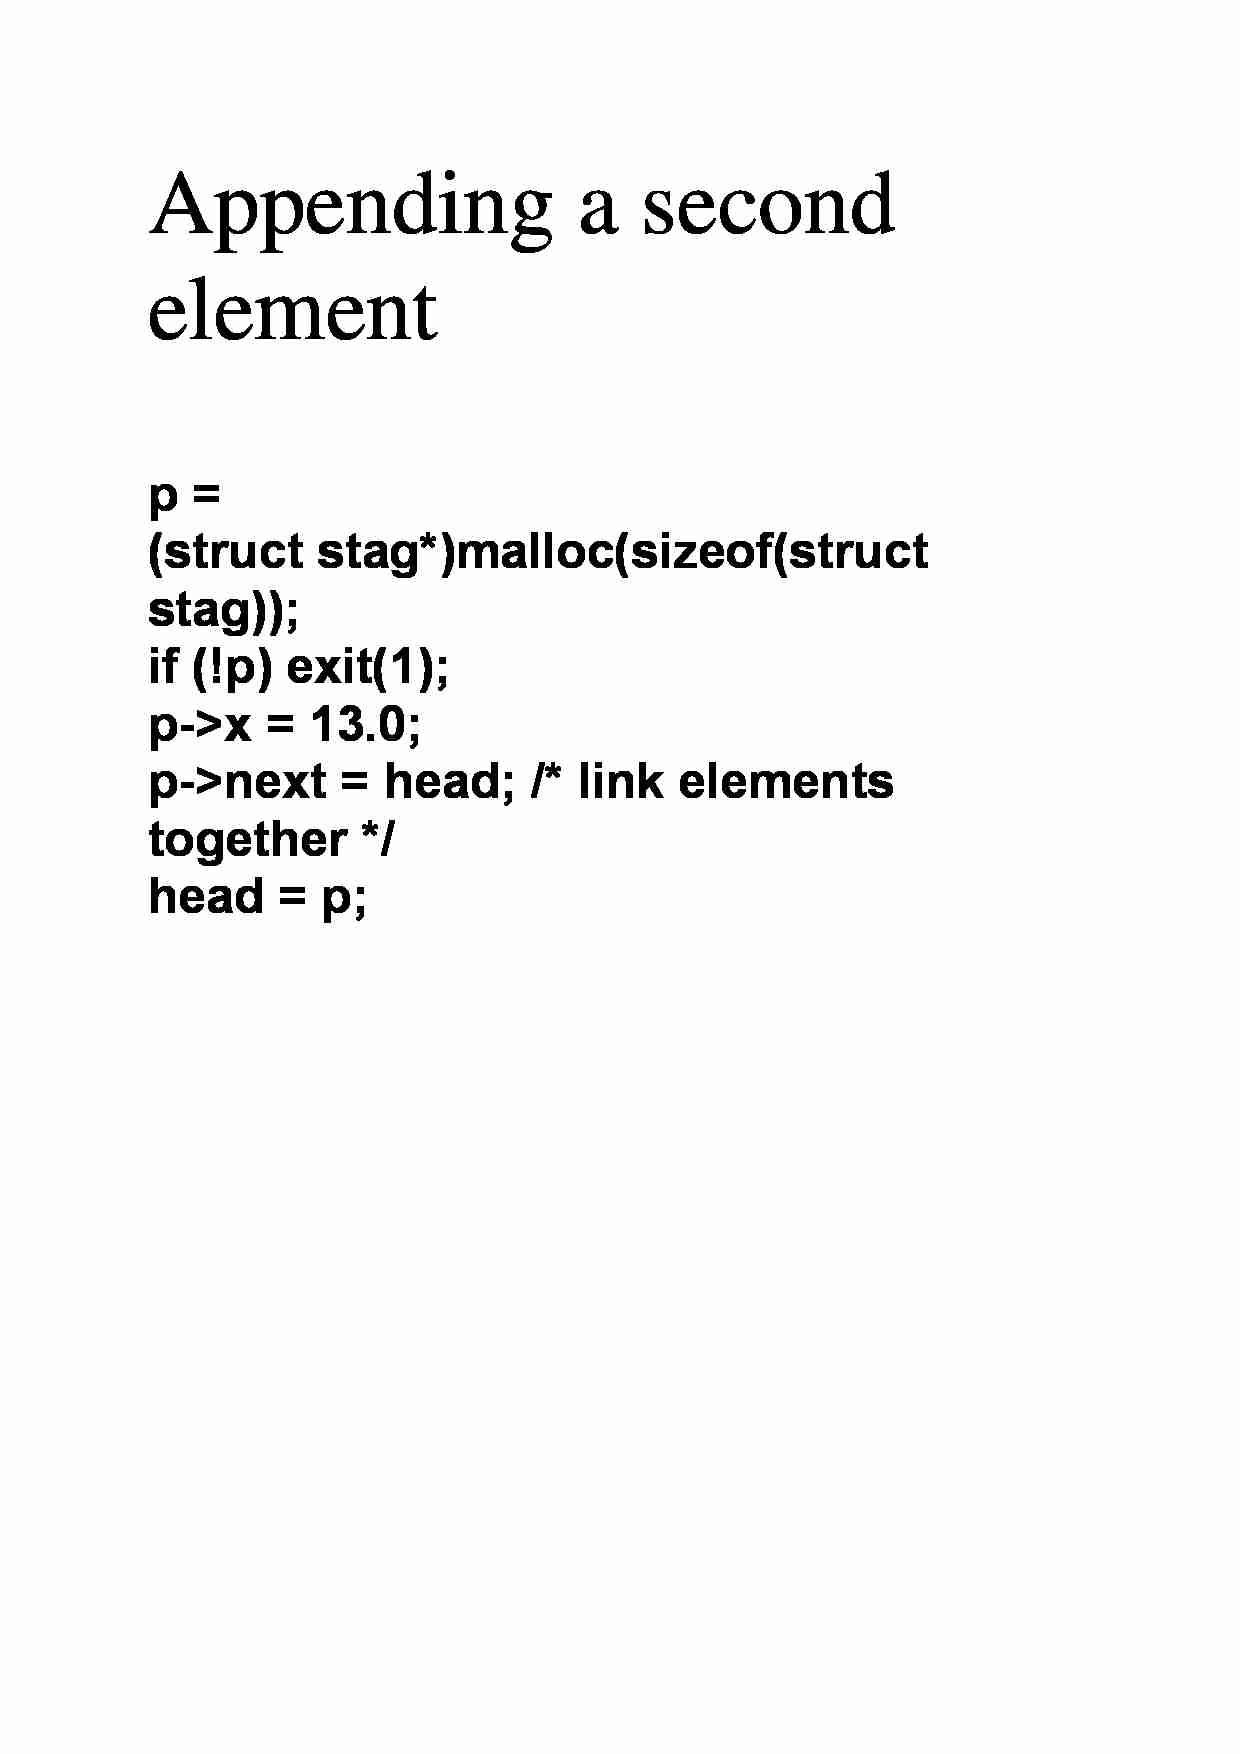 Appending a second element - strona 1